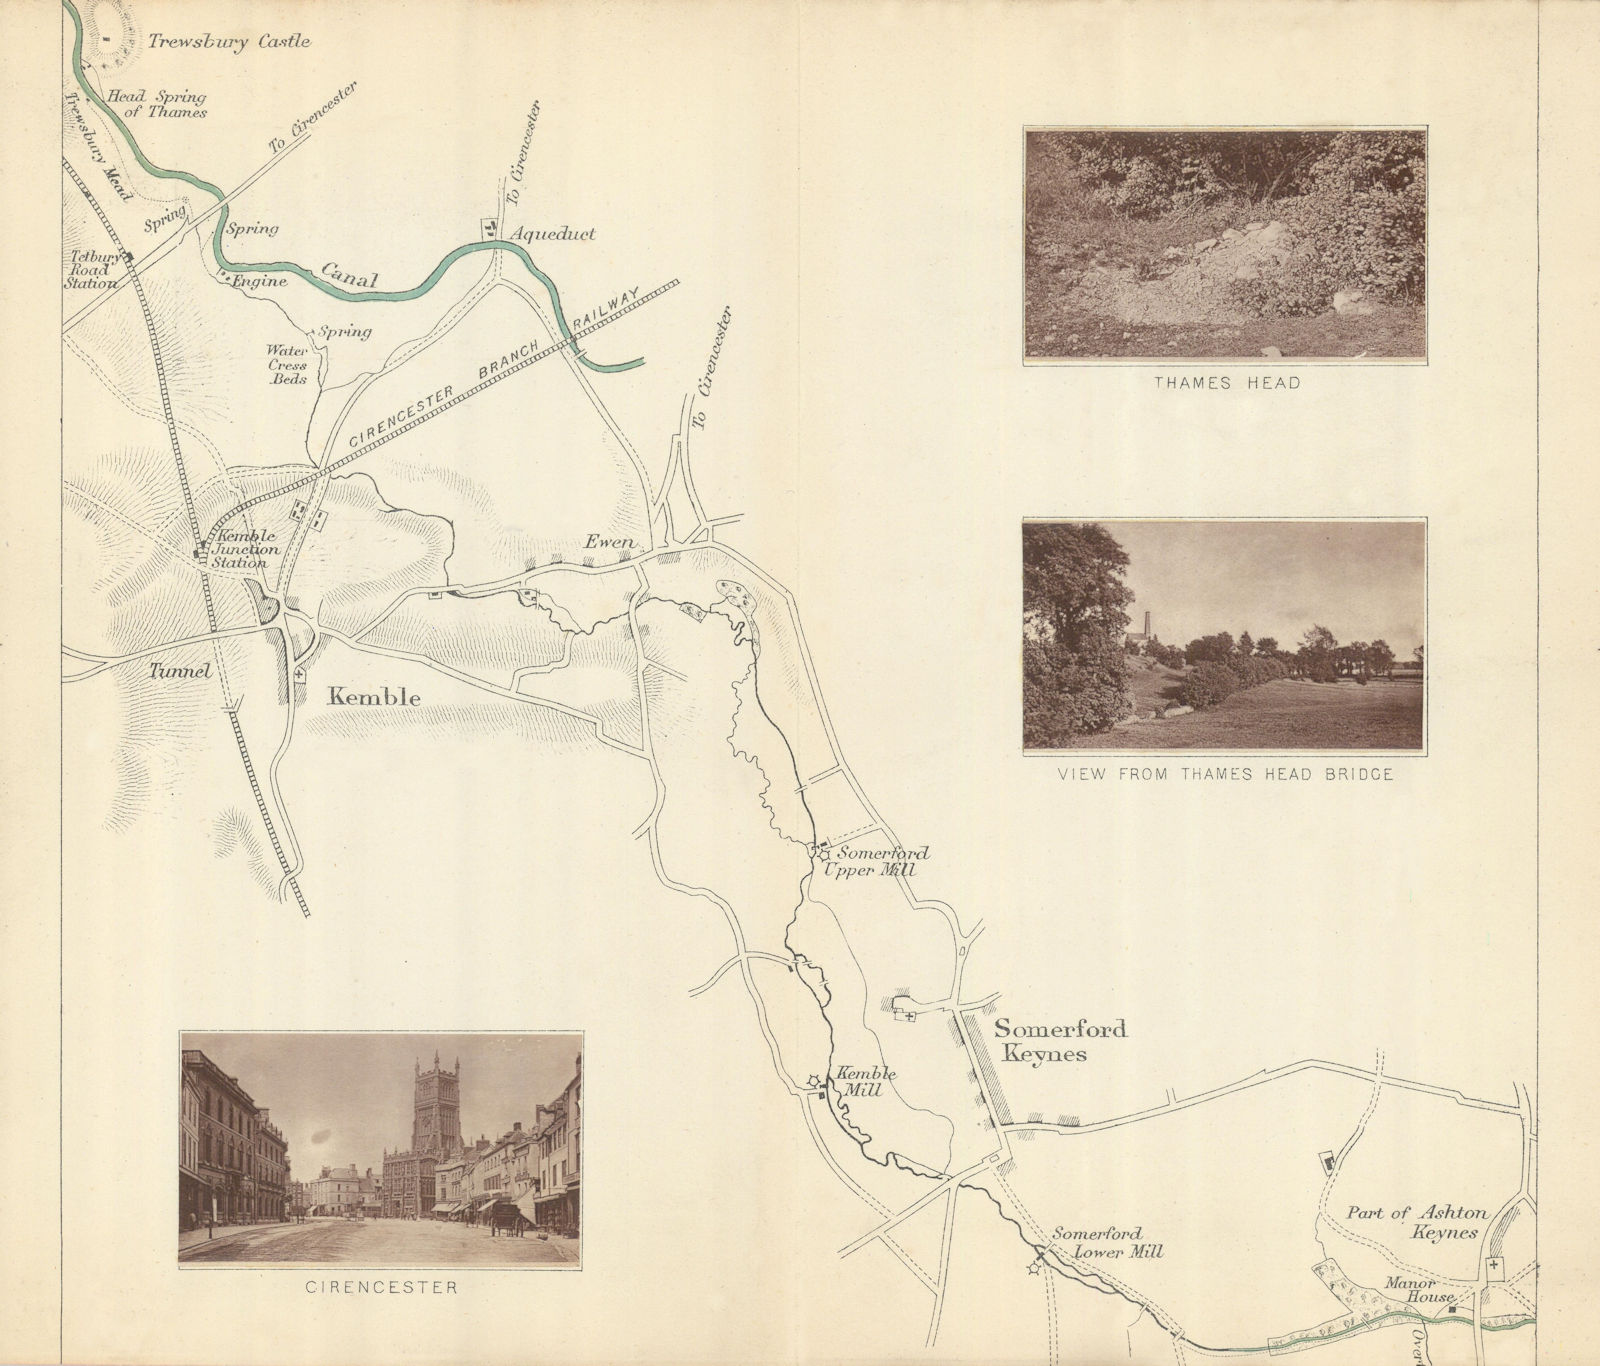 RIVER THAMES HEAD - Kemble - Somerford Keynes. Cirencester. TAUNT 1879 old map